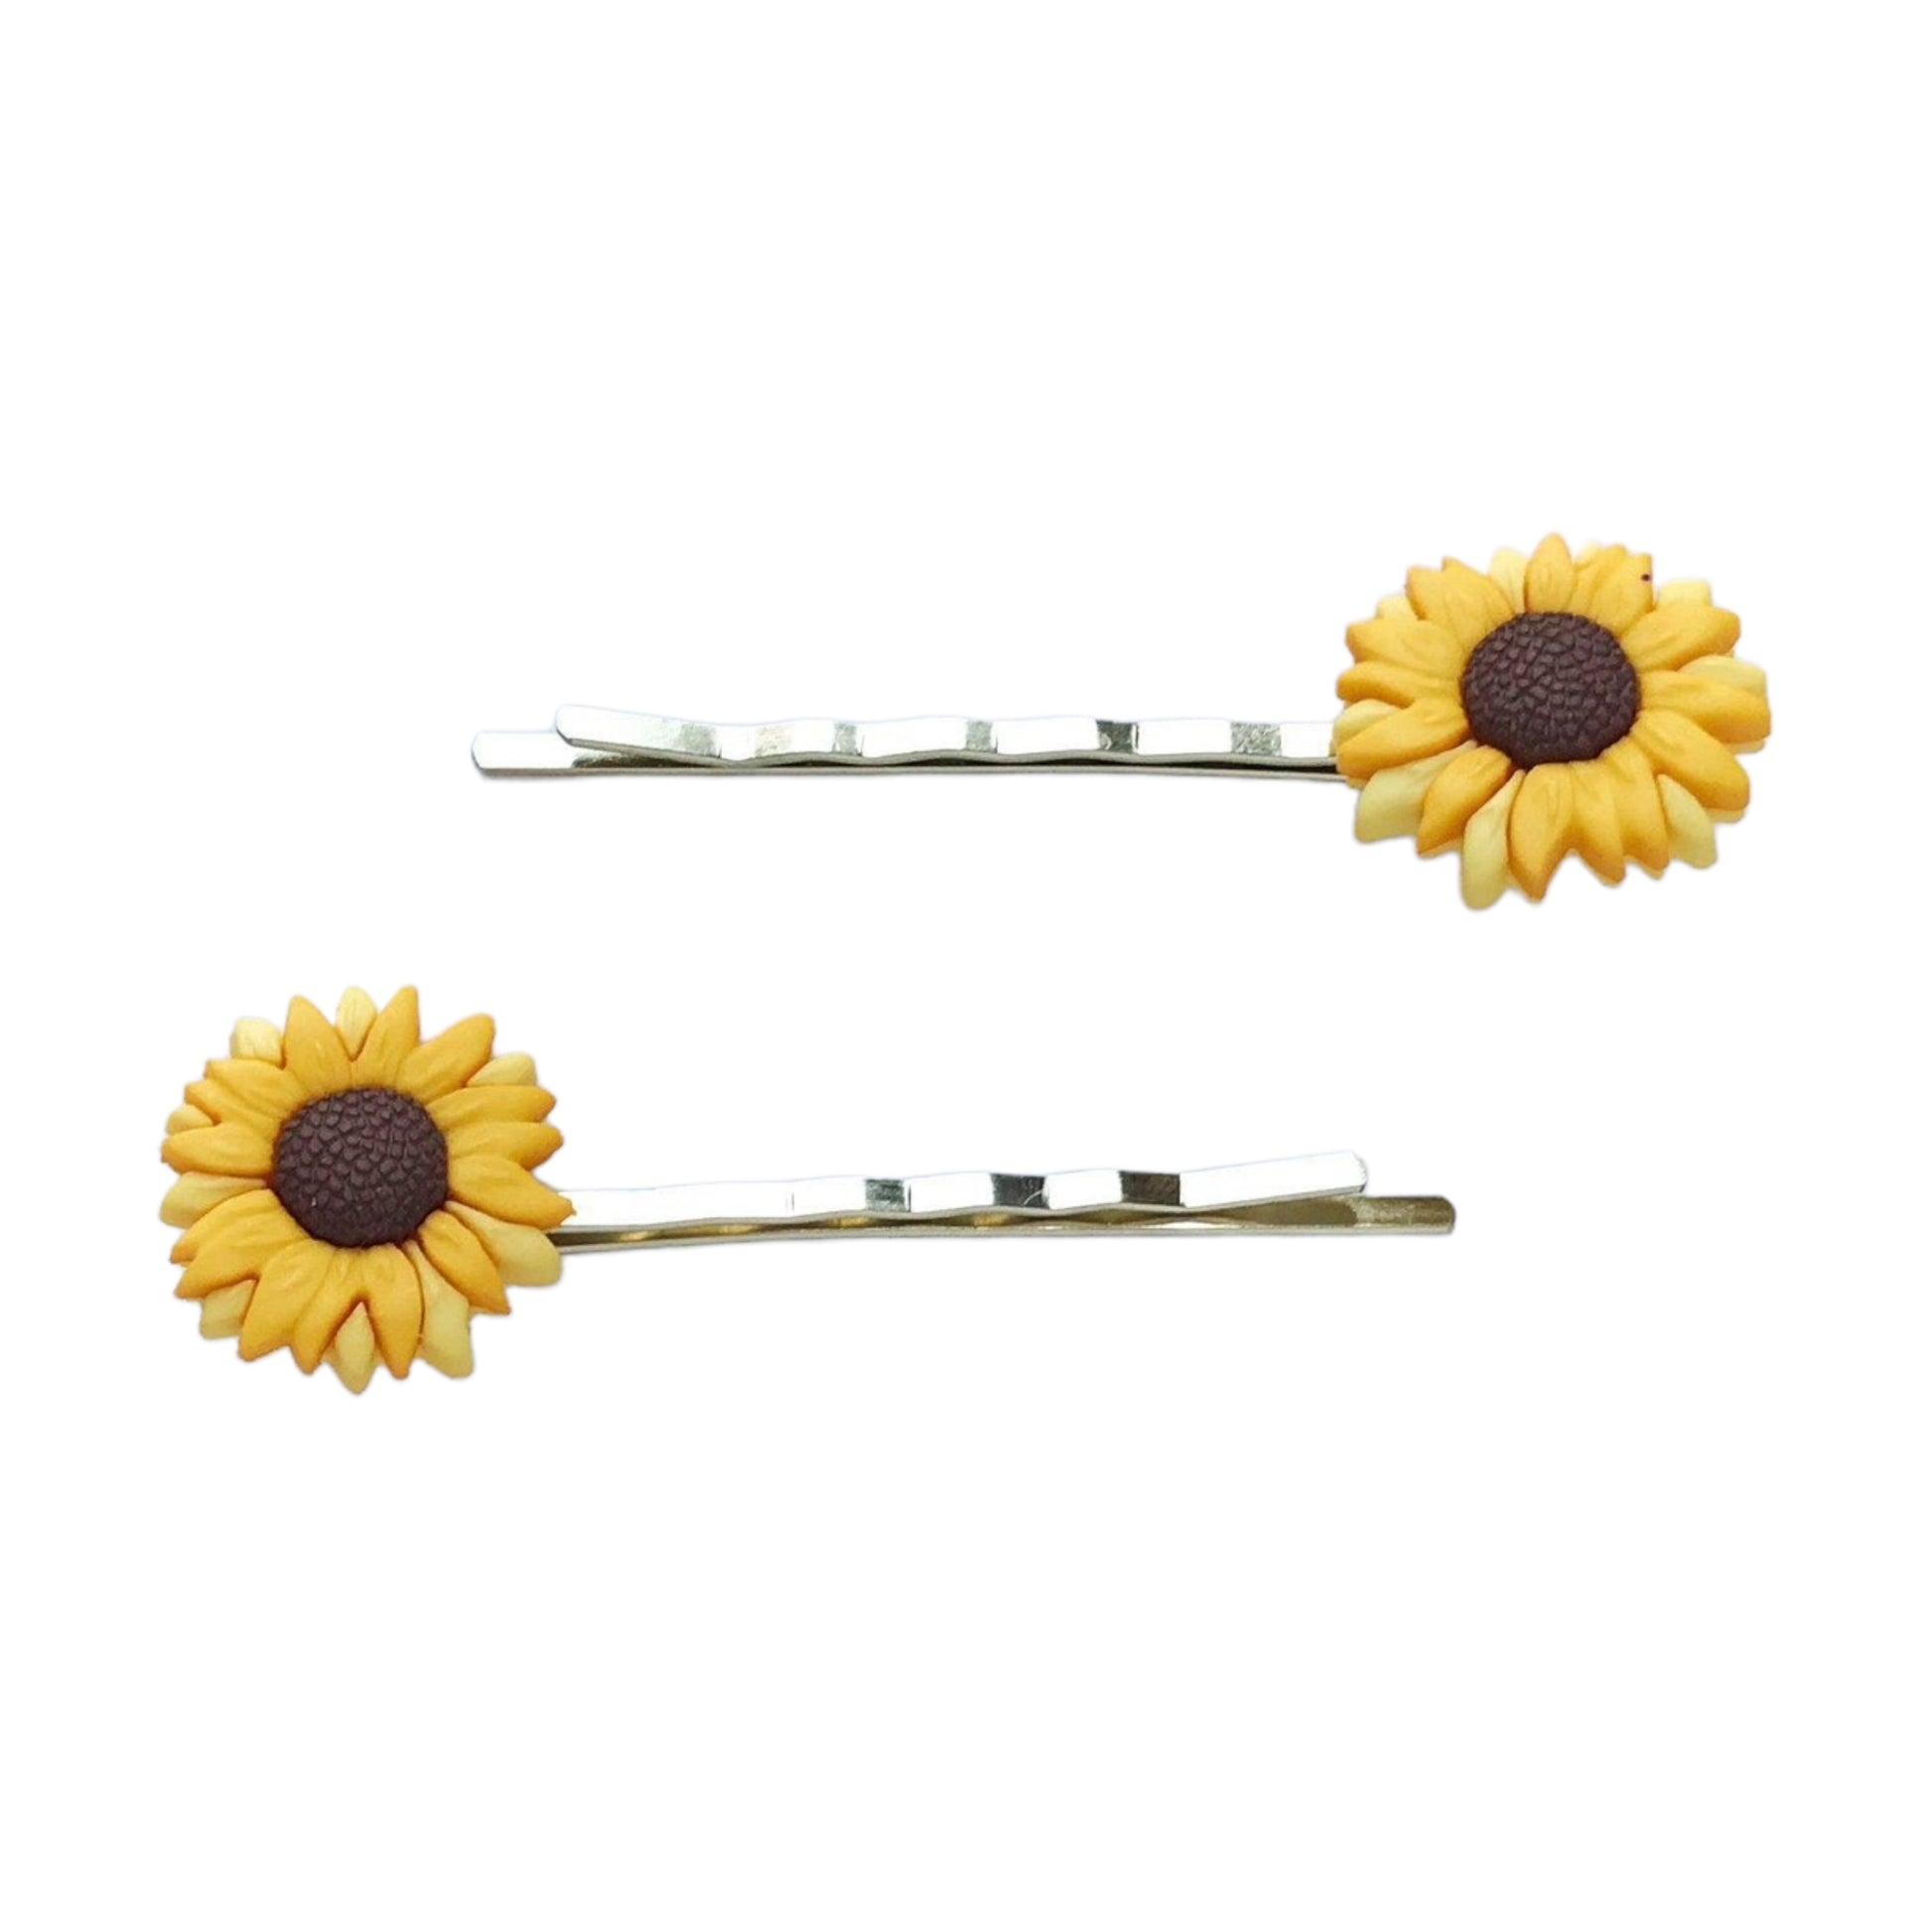 Sunflower Hair Pins: Bright & Cheerful Floral Accessories